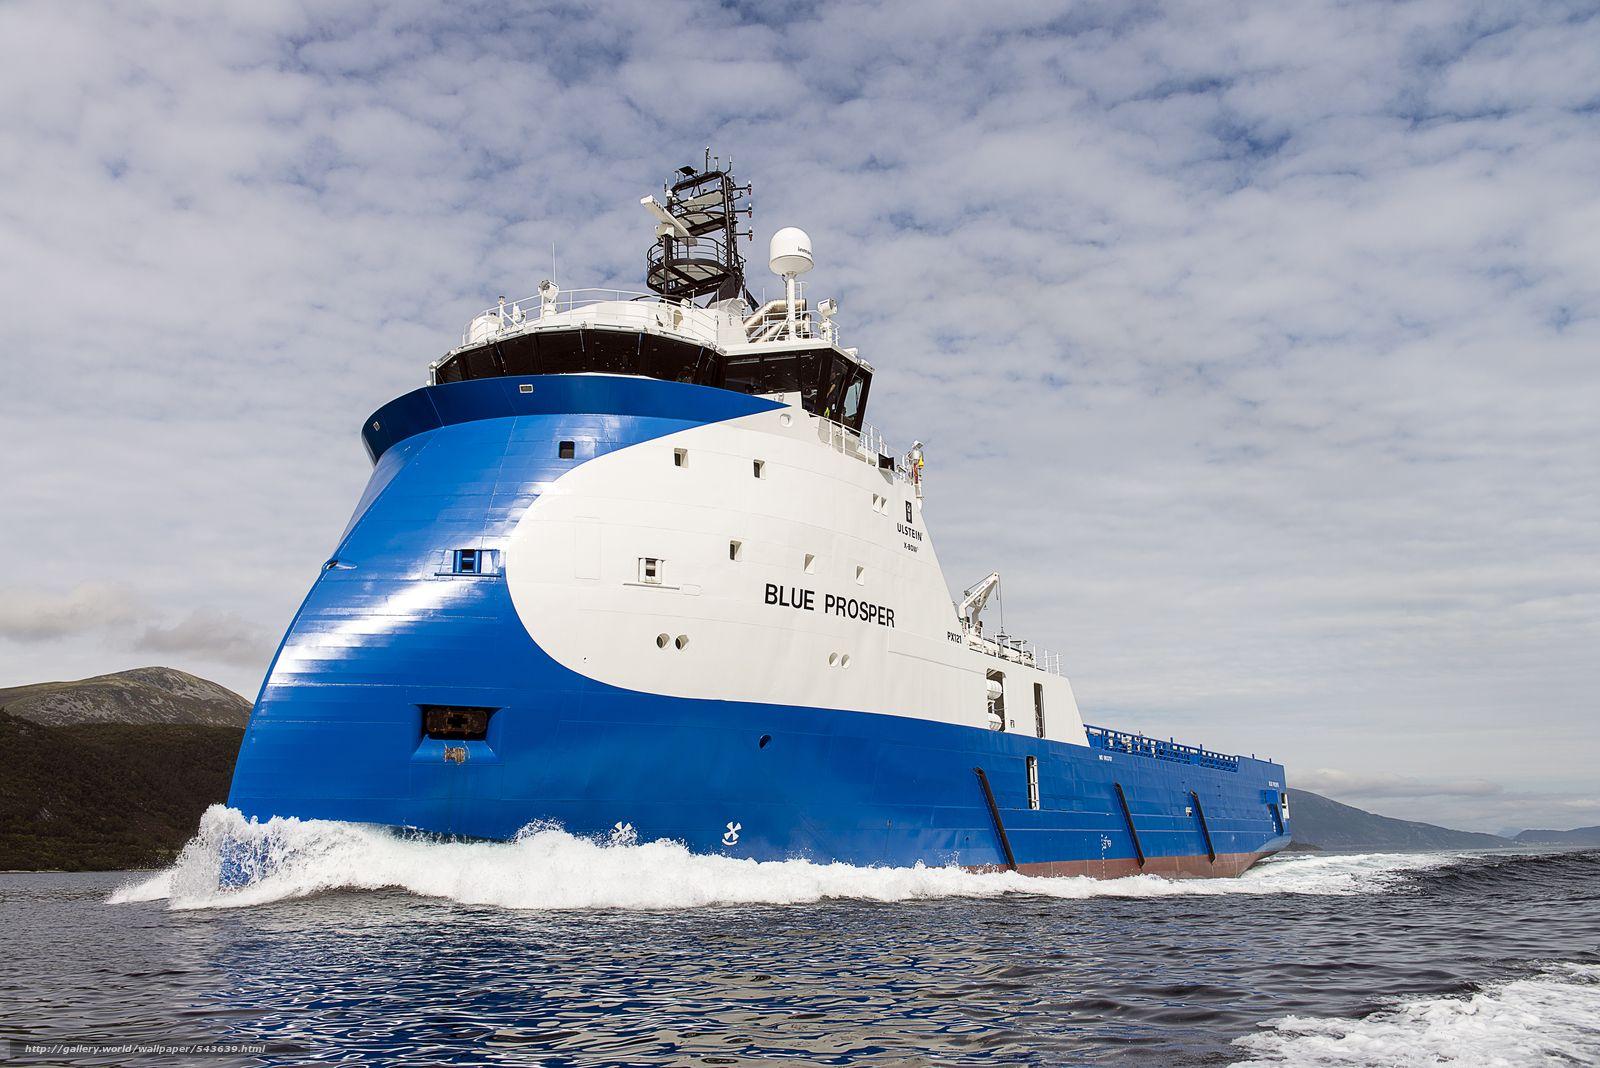 Download wallpaper Blue Prosper, replenishment ship, offshore Blue